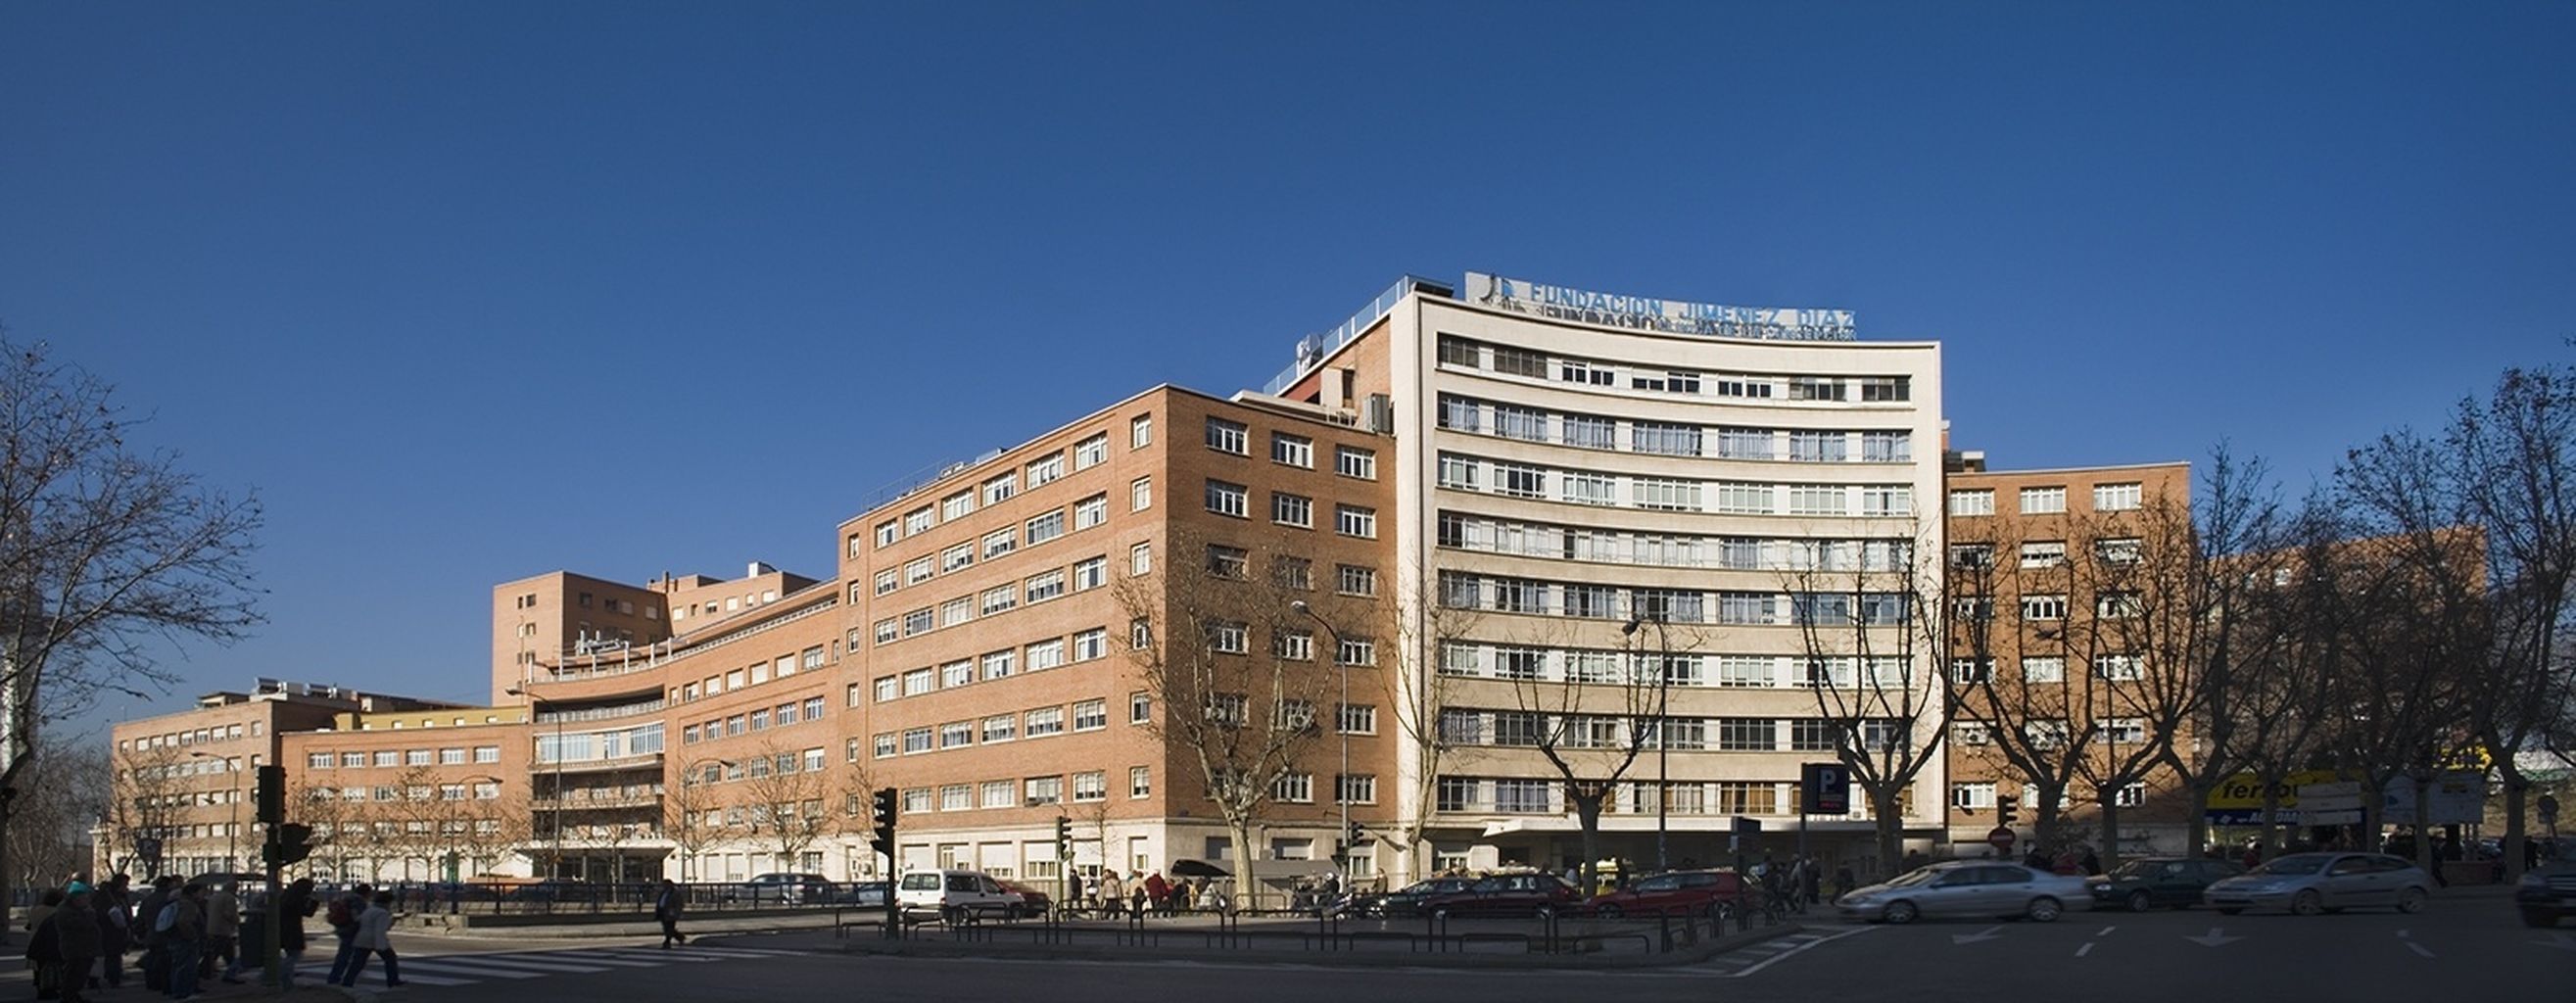 Fundación Jiménez Díaz de Madrid. Eliminar